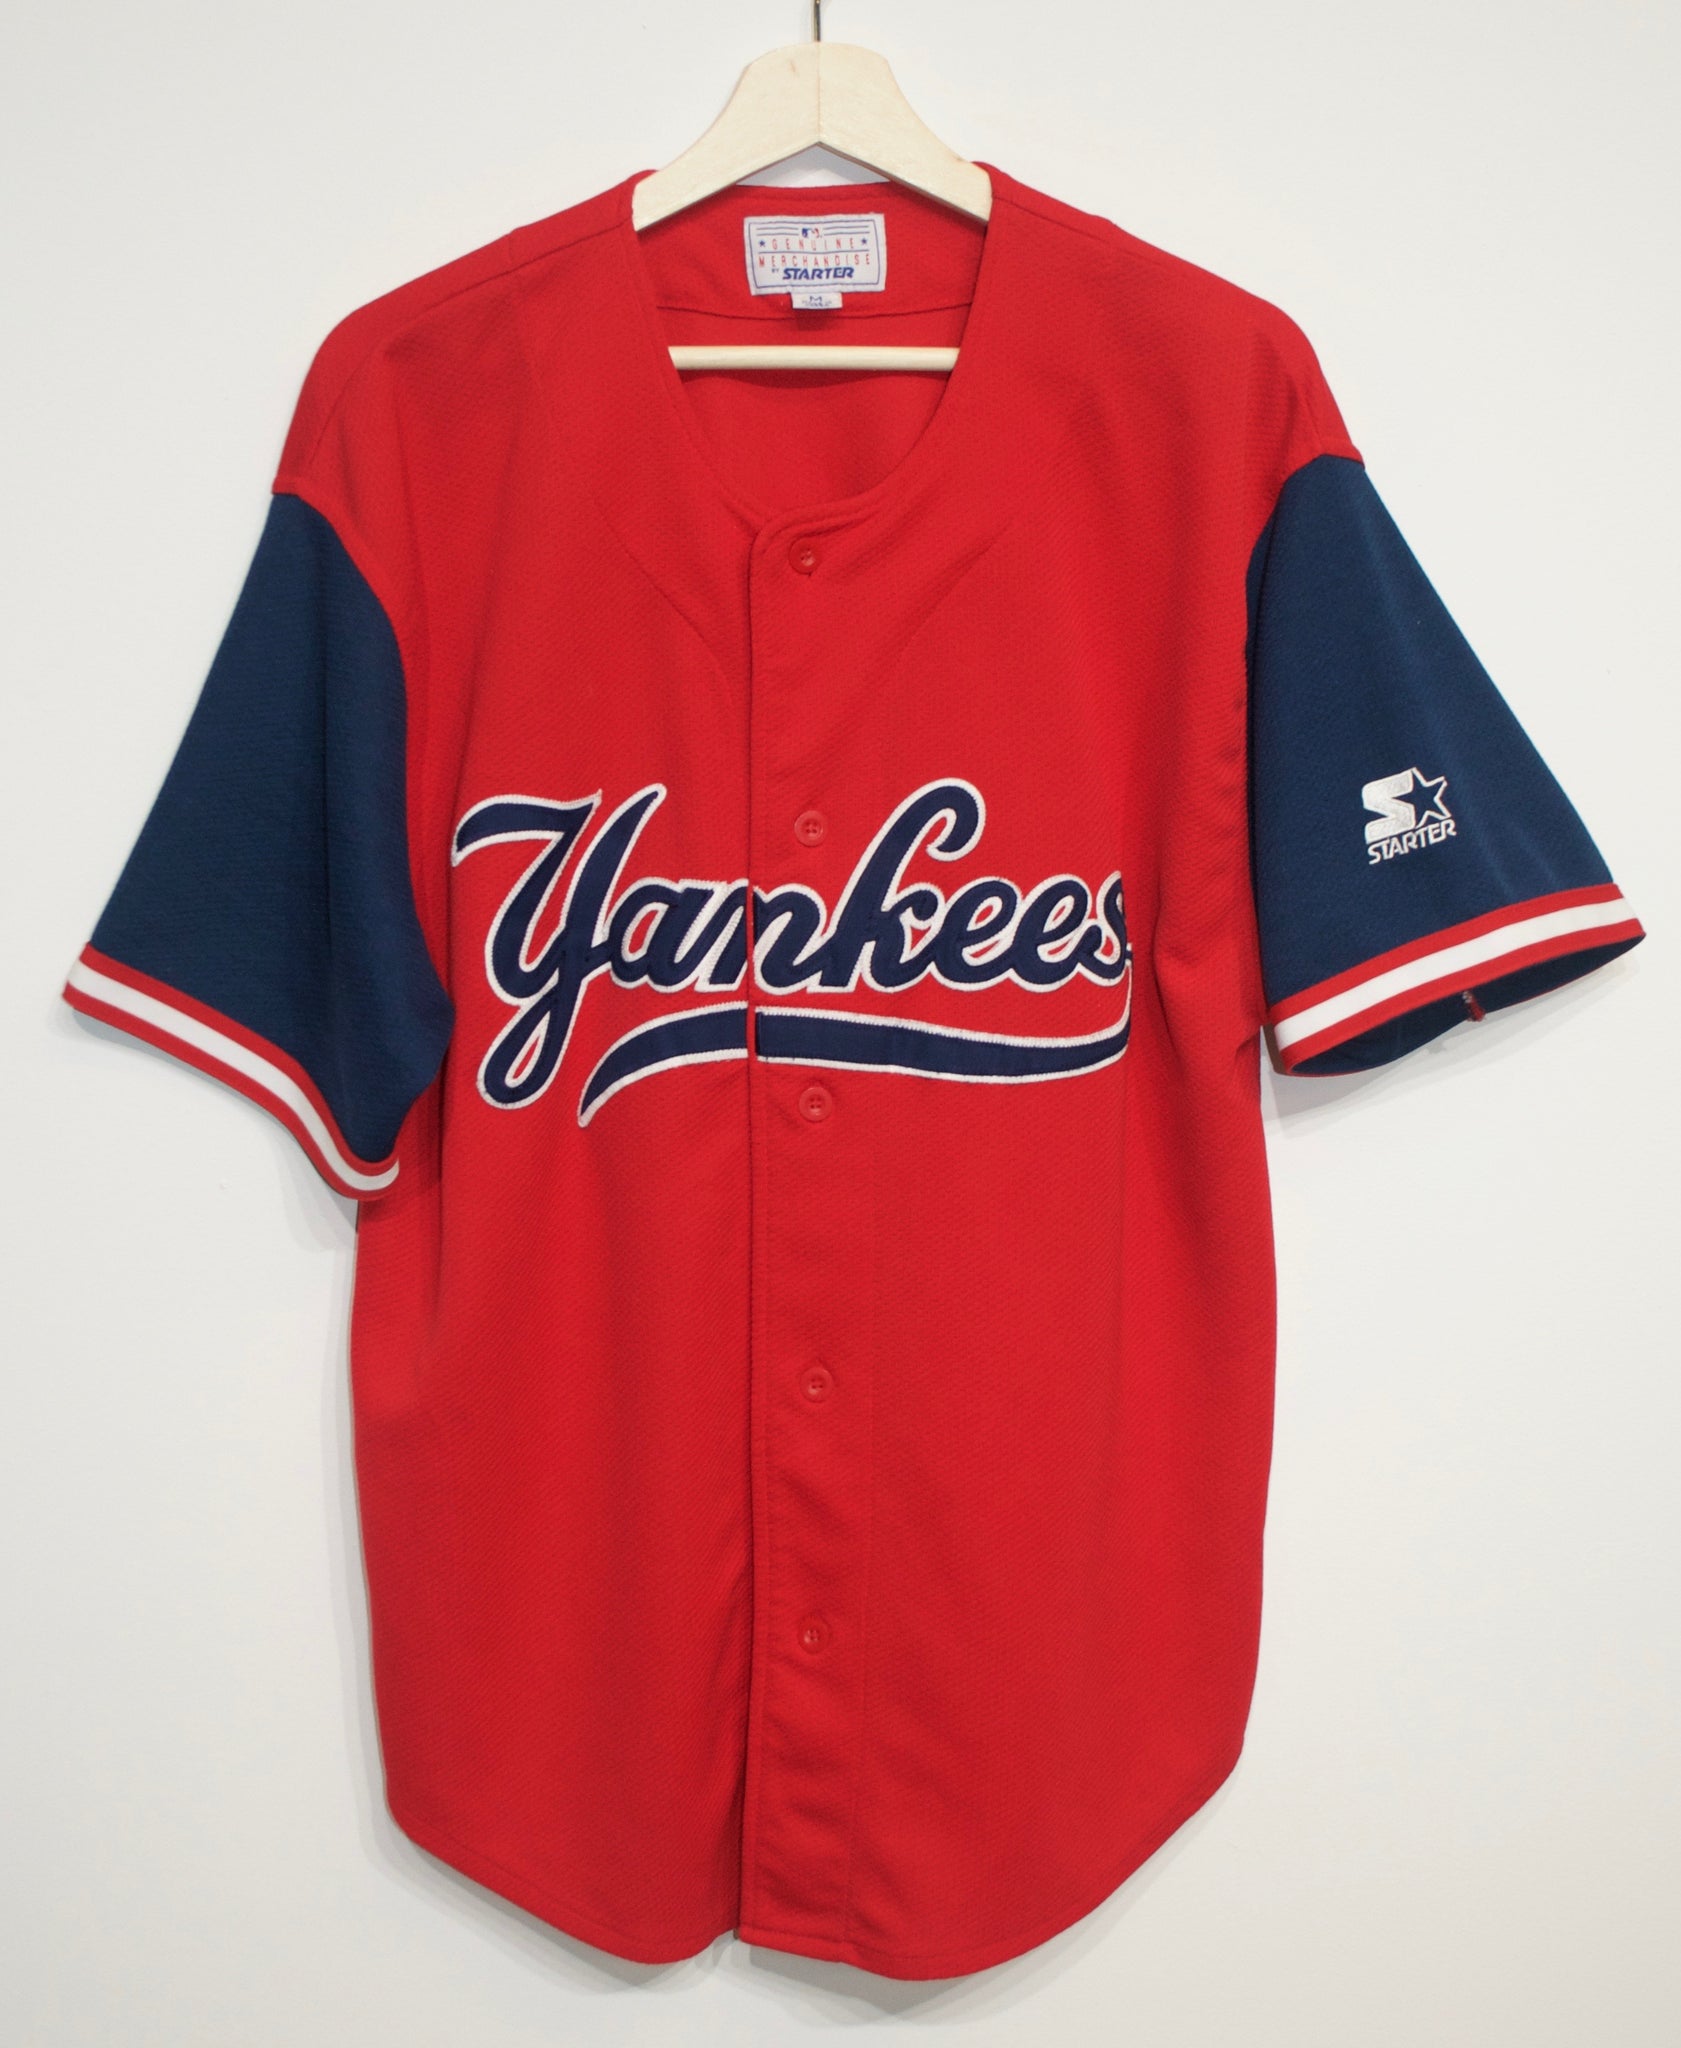 New York Yankees - Jersey - M